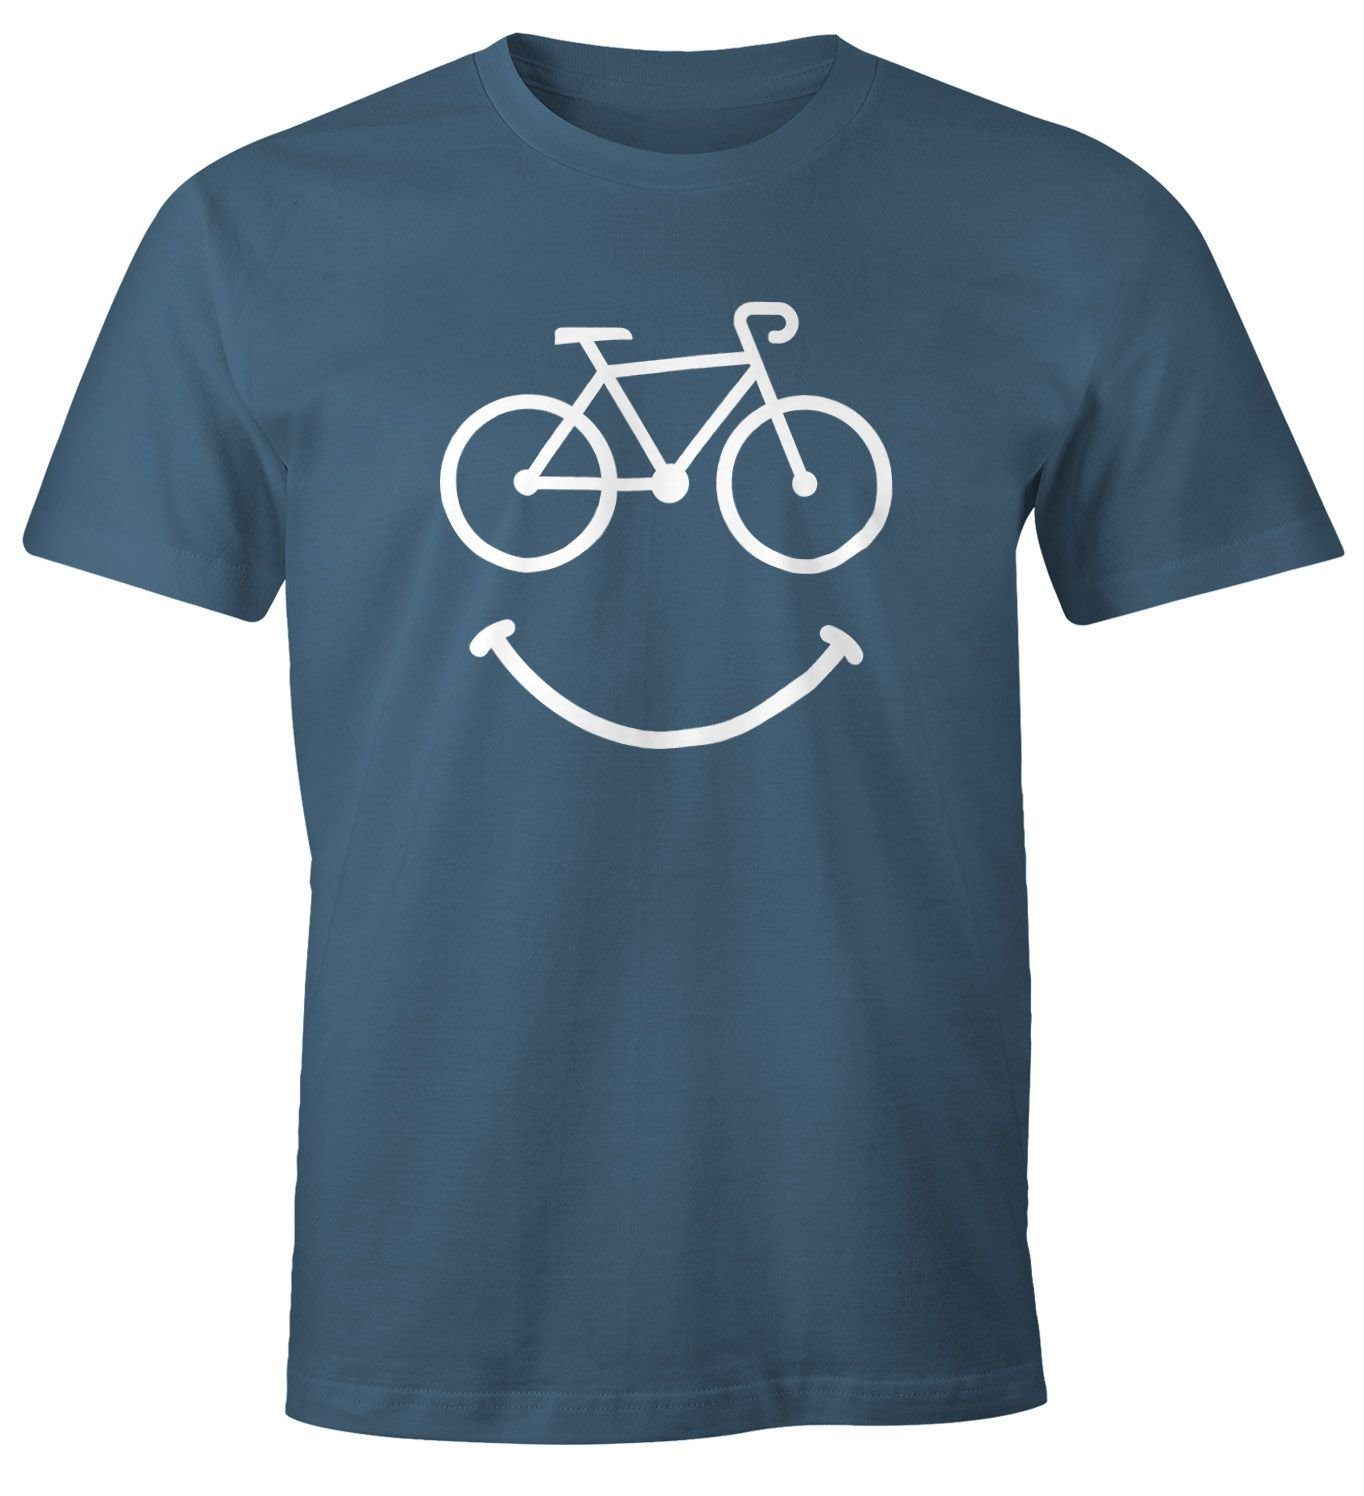 MoonWorks Print-Shirt Fahrrad Herren T-Shirt Smile Happy Bike Radfahren Fun-Shirt Moonworks® mit Print blau